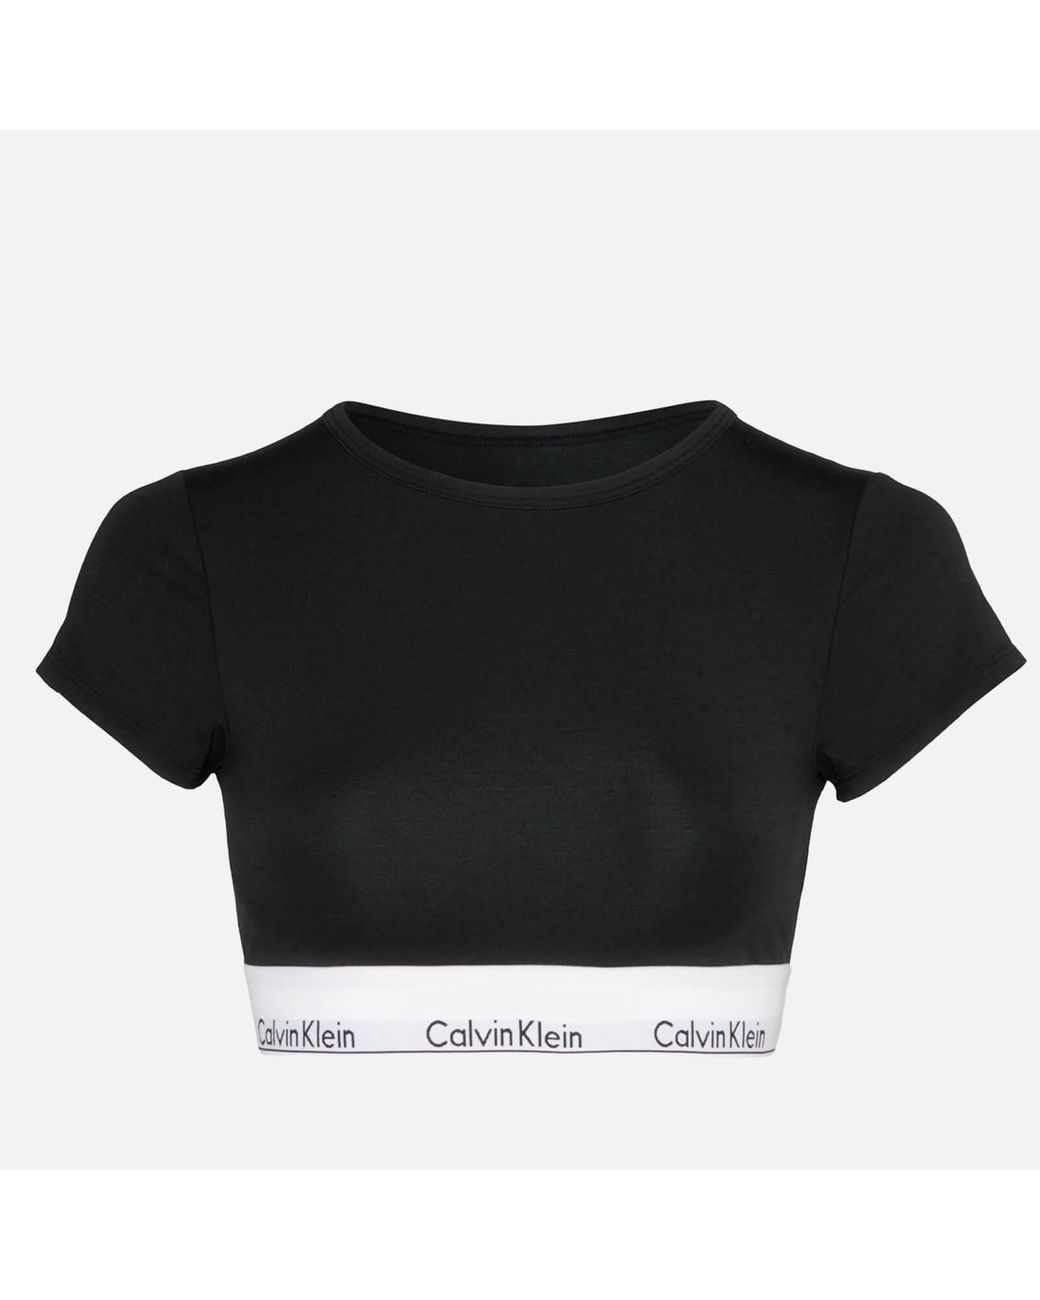 https://cdna.lystit.com/1040/1300/n/photos/thehut/92b34c25/calvin-klein-black-Stretch-Cotton-and-Modal-Blend-T-Shirt-Bralette.jpeg